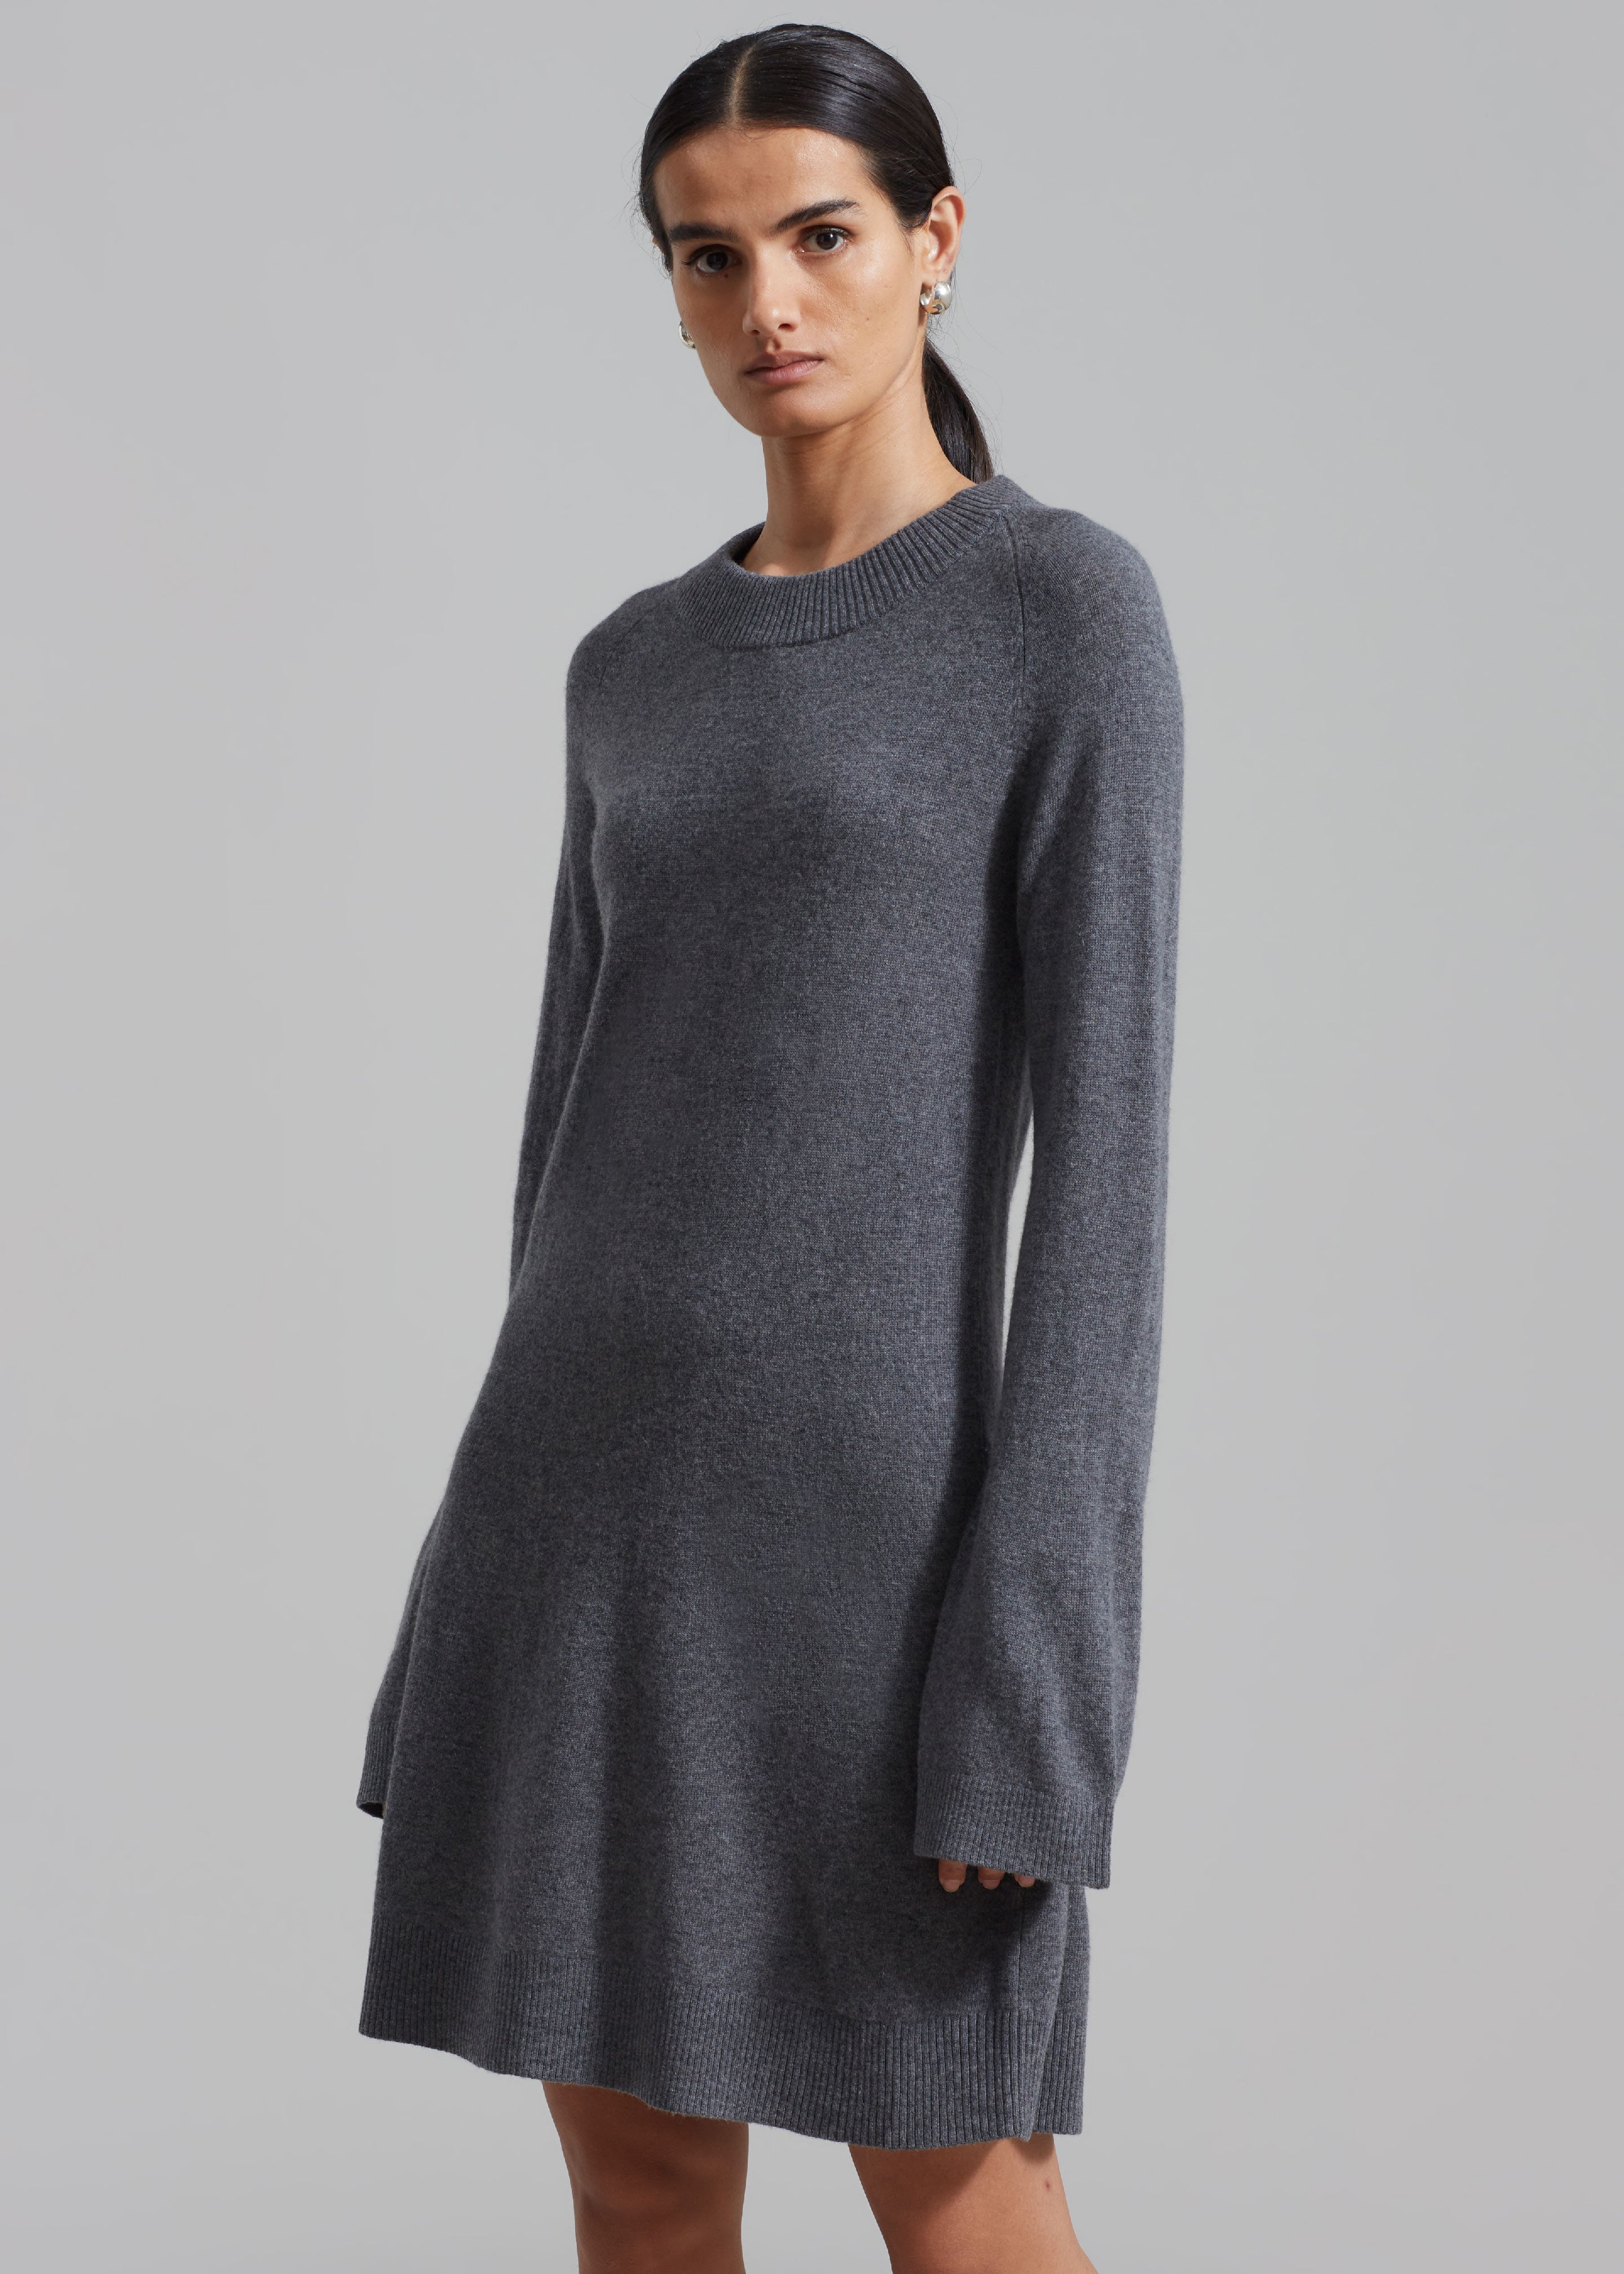 The Garment Como Raglan Dress - Grey Melange - 3